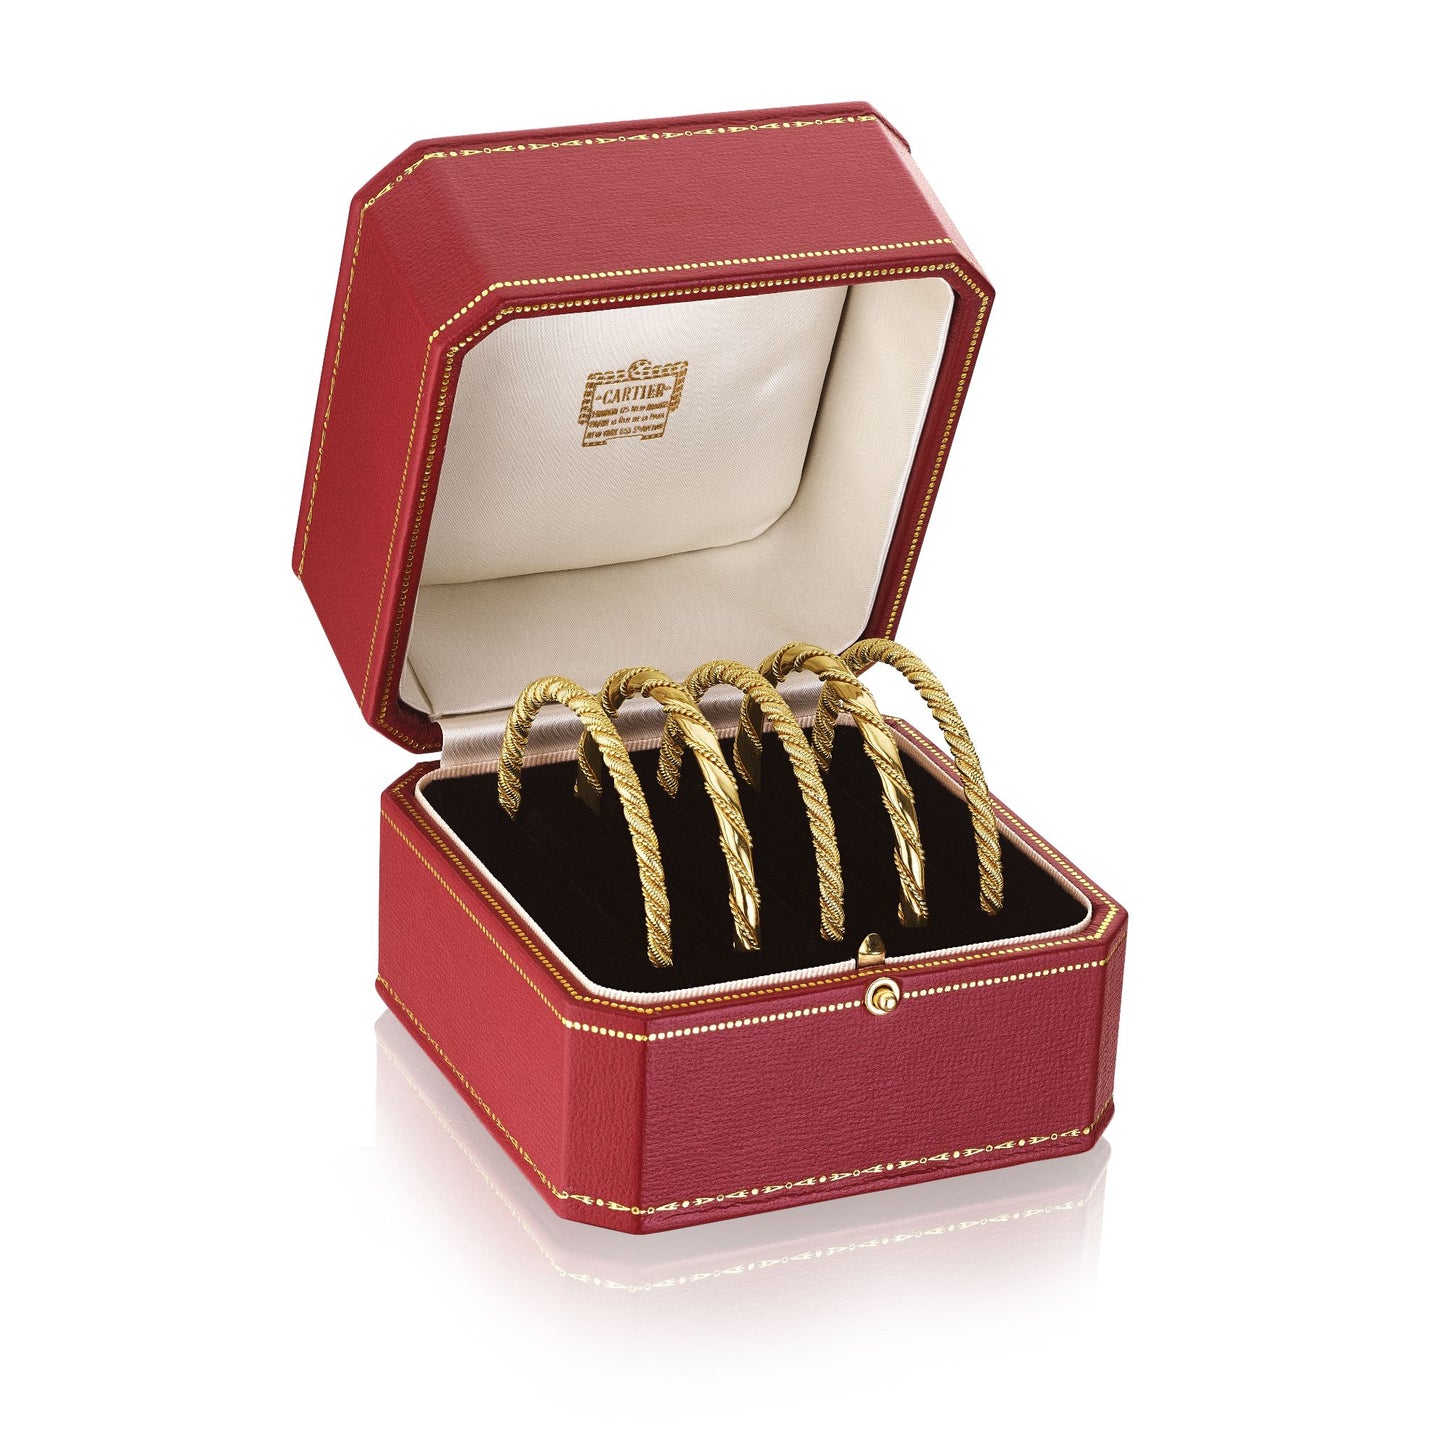 FIVE GOLD ROPE TWIST BANGLE BRACELETS BY CARTIER, CIRCA 1950